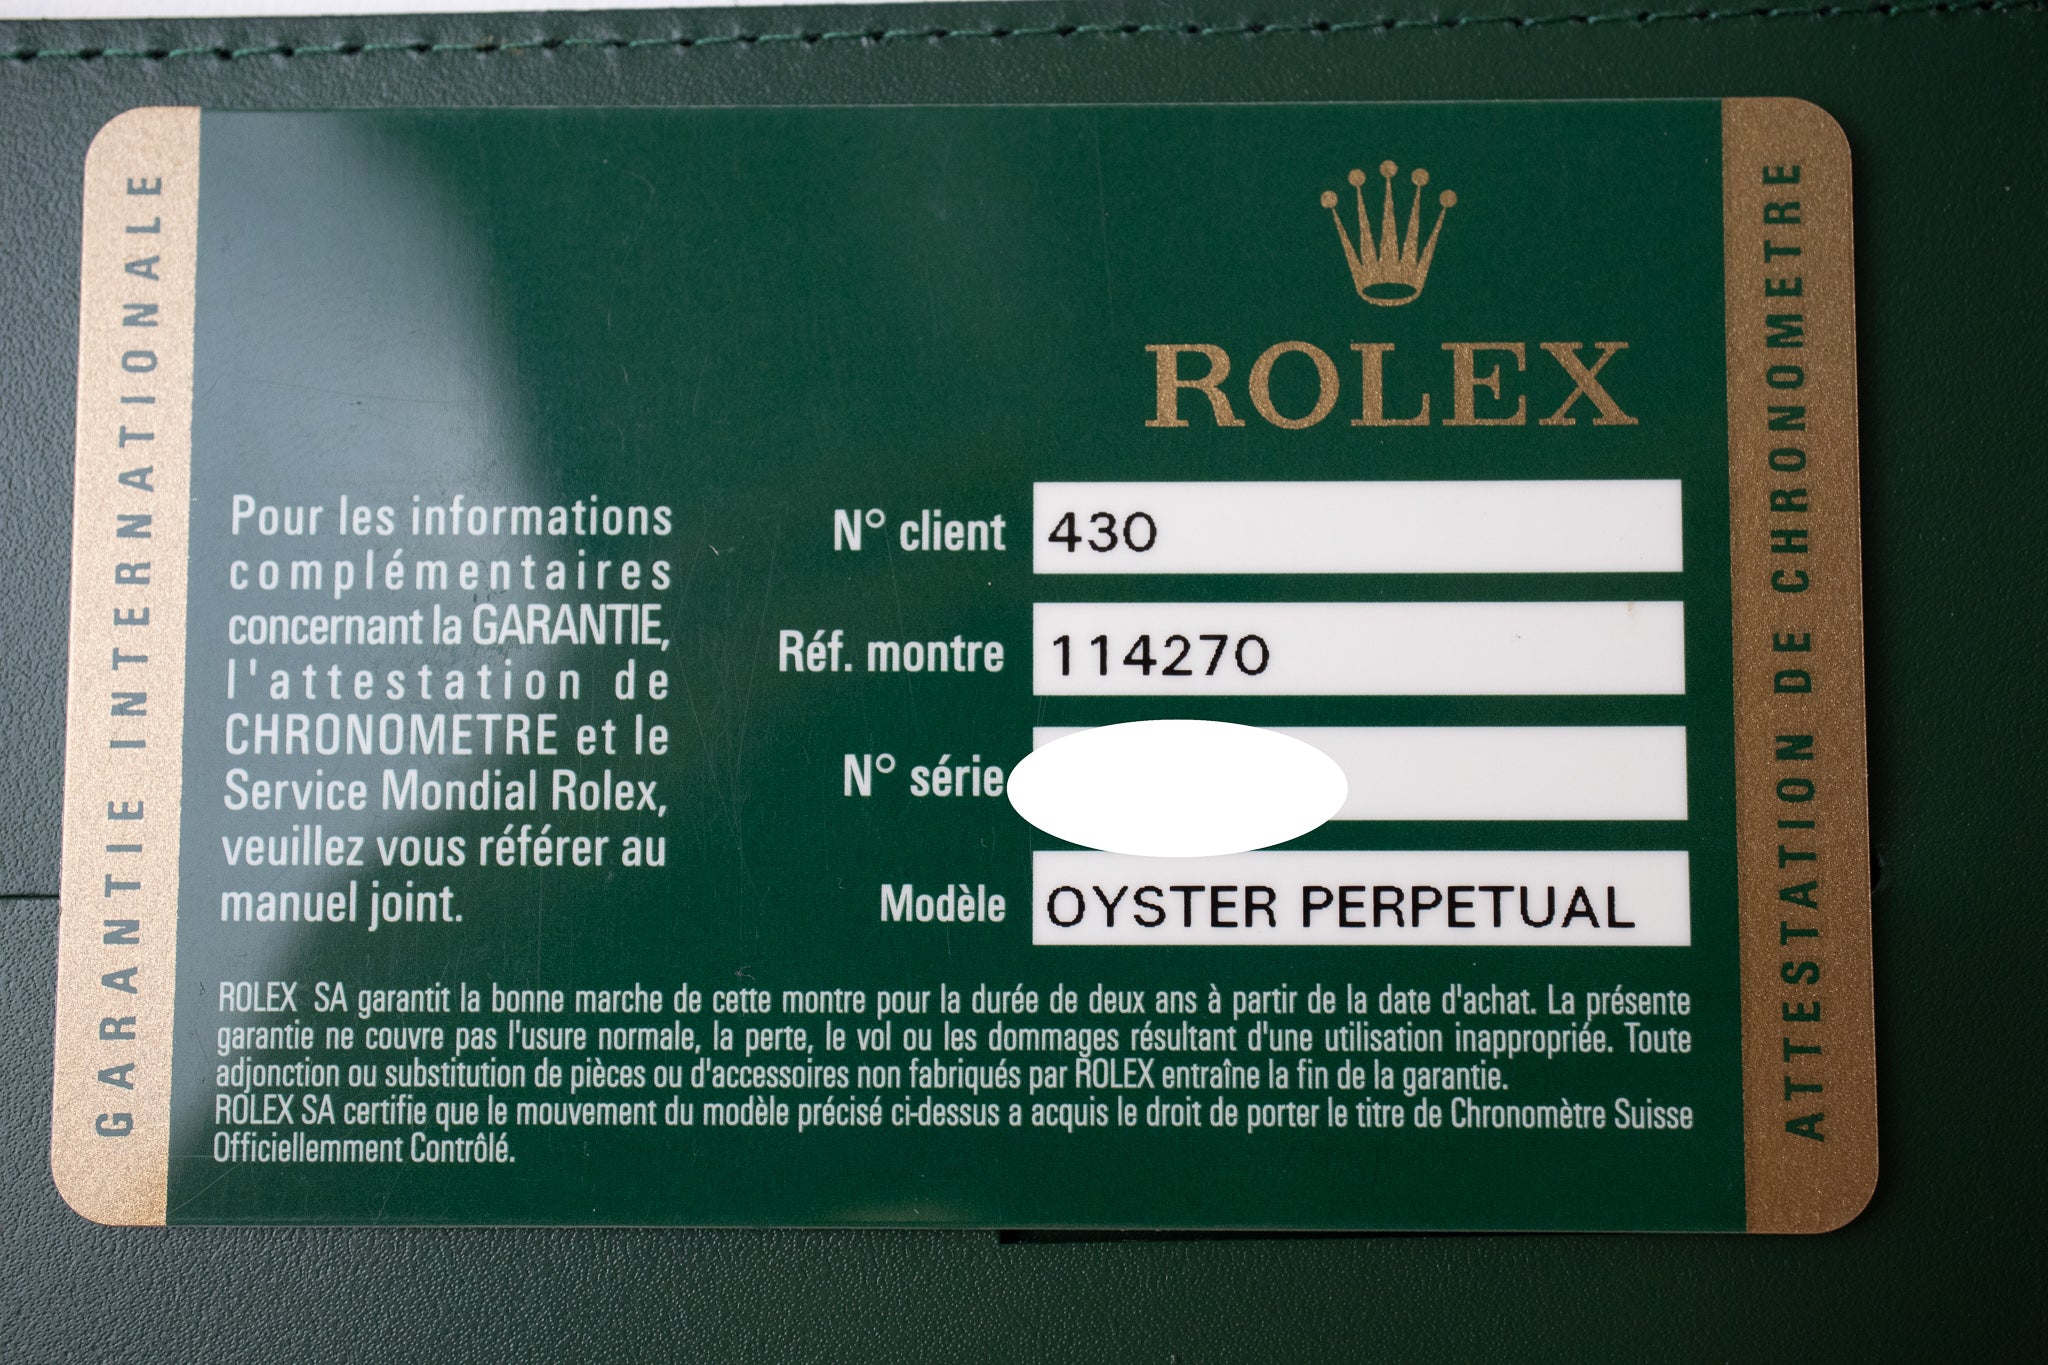 Rolex Explorer 114270